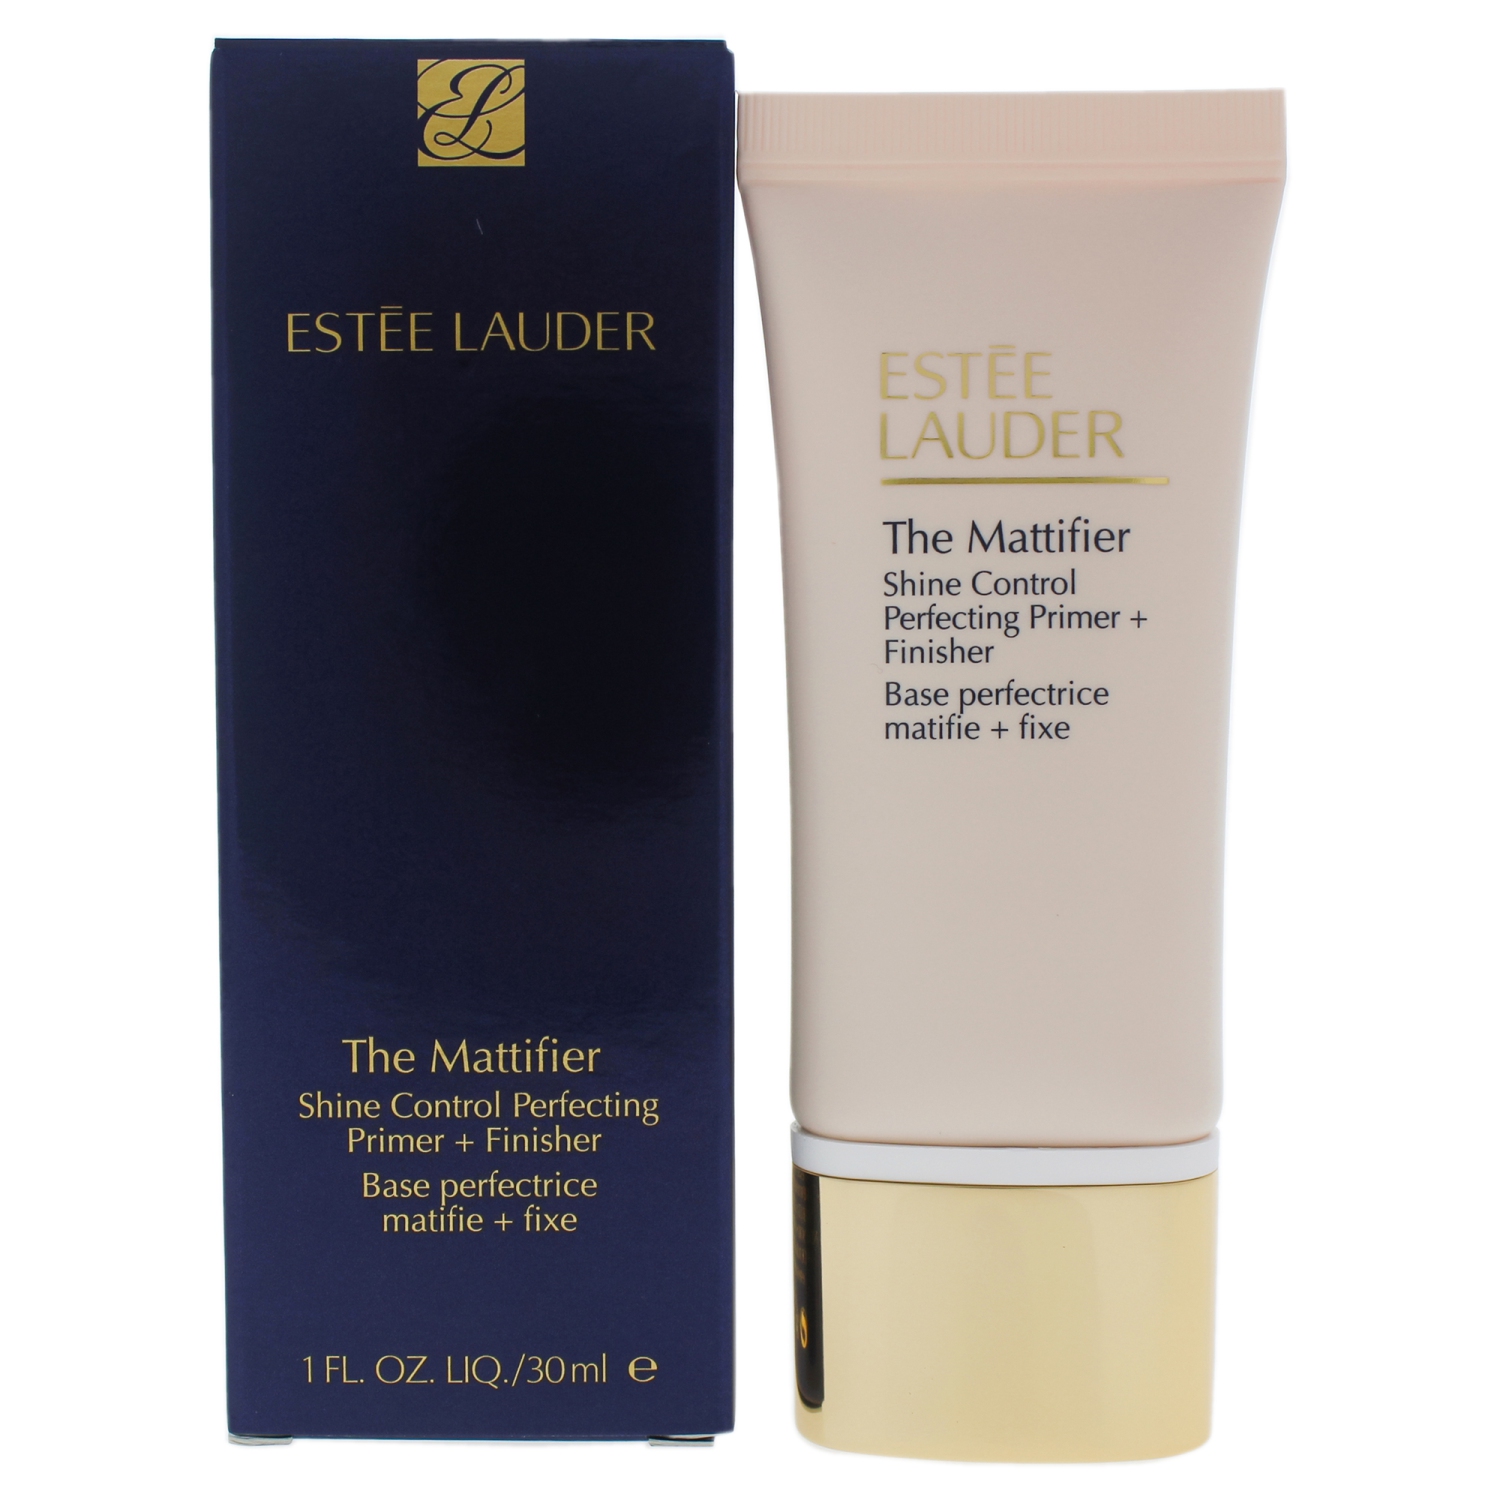 The Mattifier Shine Control Perfecting Primer Plus Finisher by Estee Lauder - 1 oz Primer